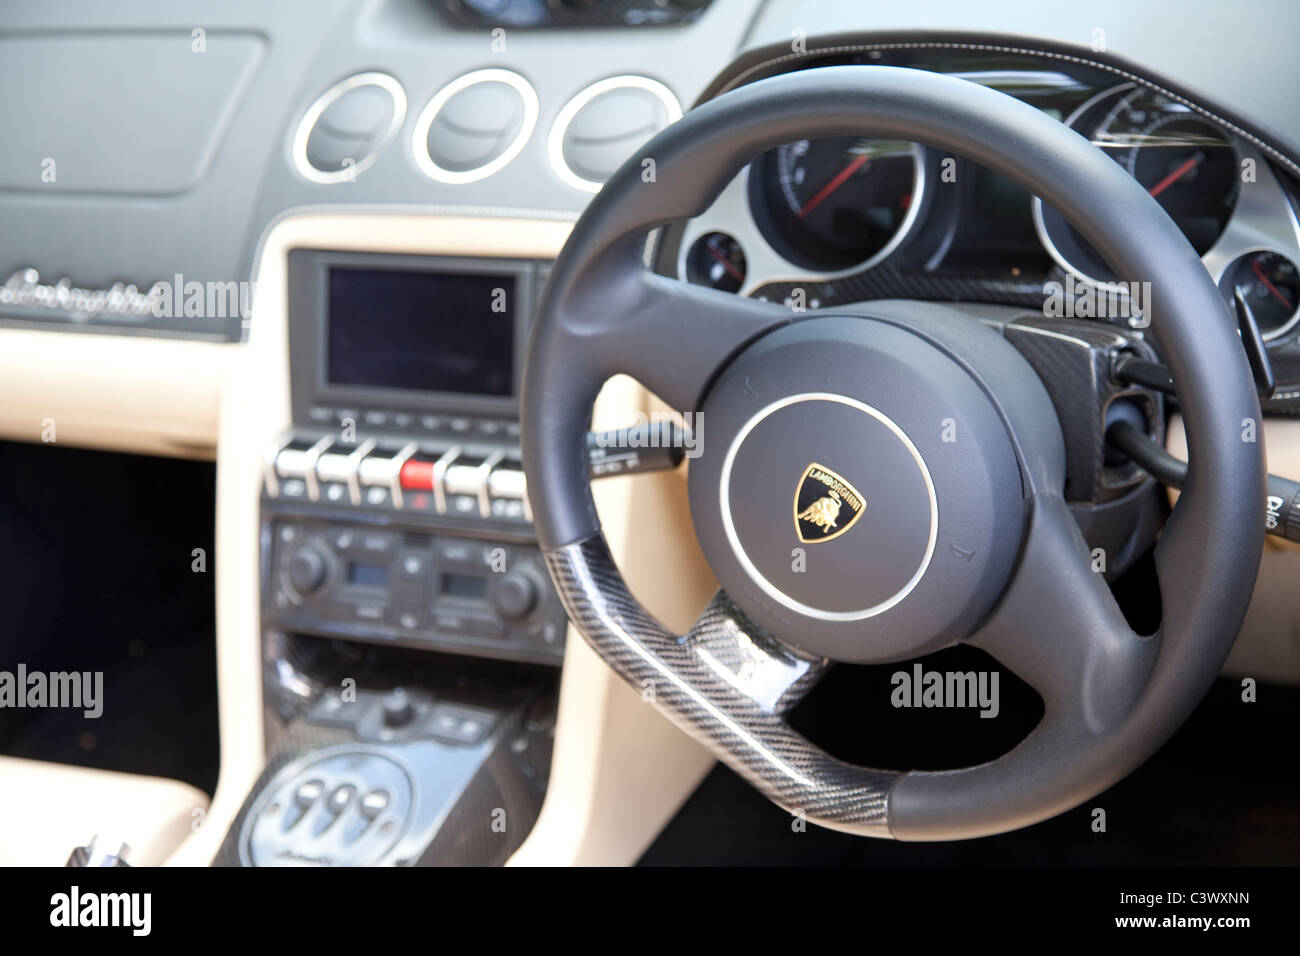 A steering wheel and interior including dashboard inside a Lamborghini  sports car England UK Stock Photo - Alamy